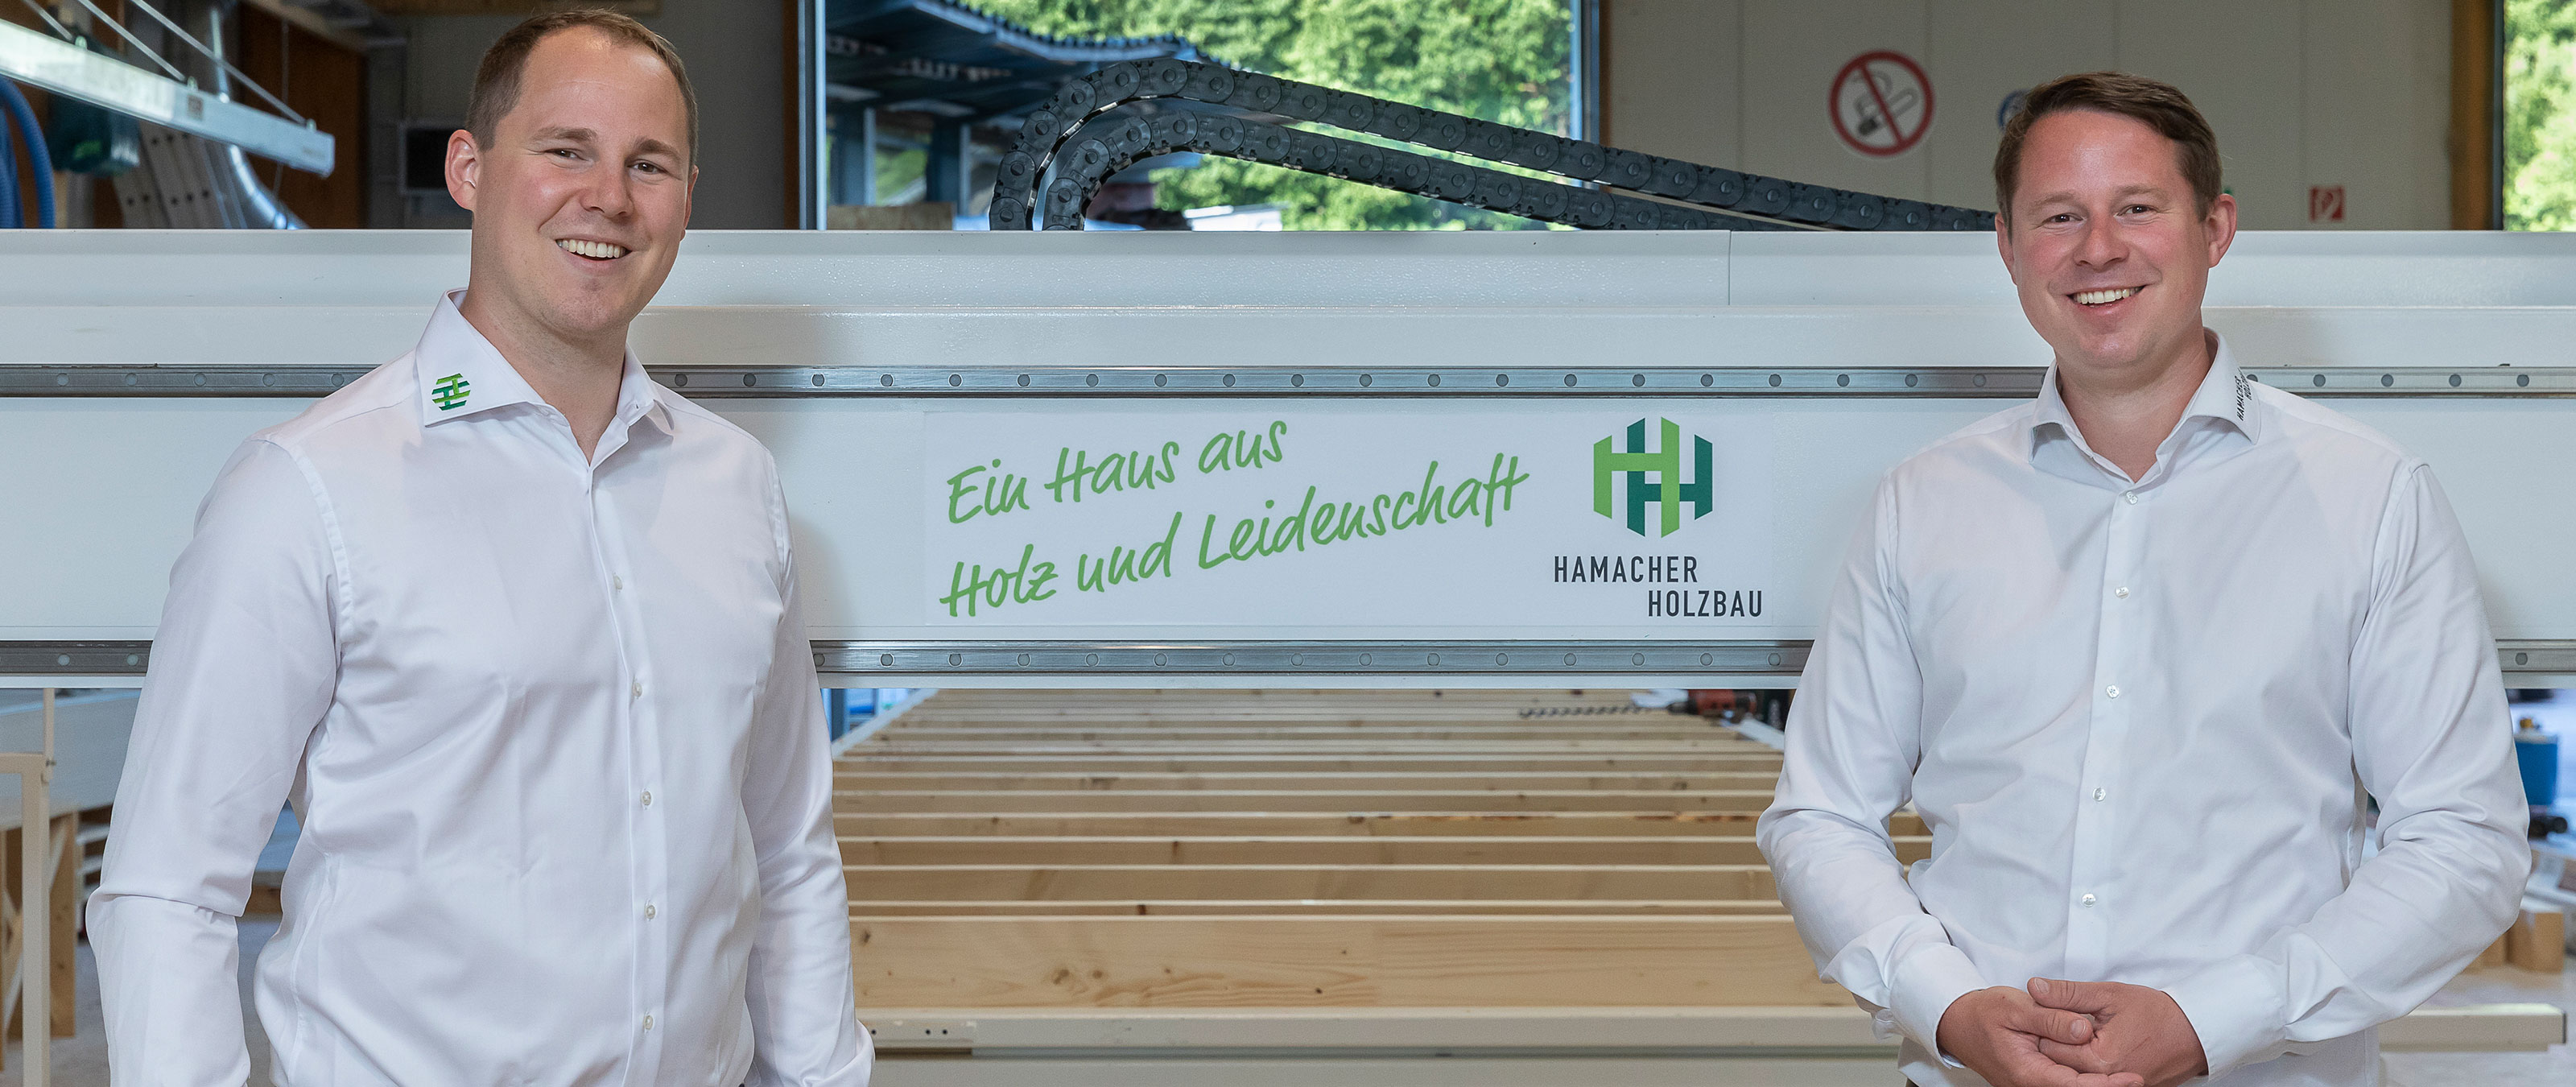 Managing directors of Hamacher GmbH